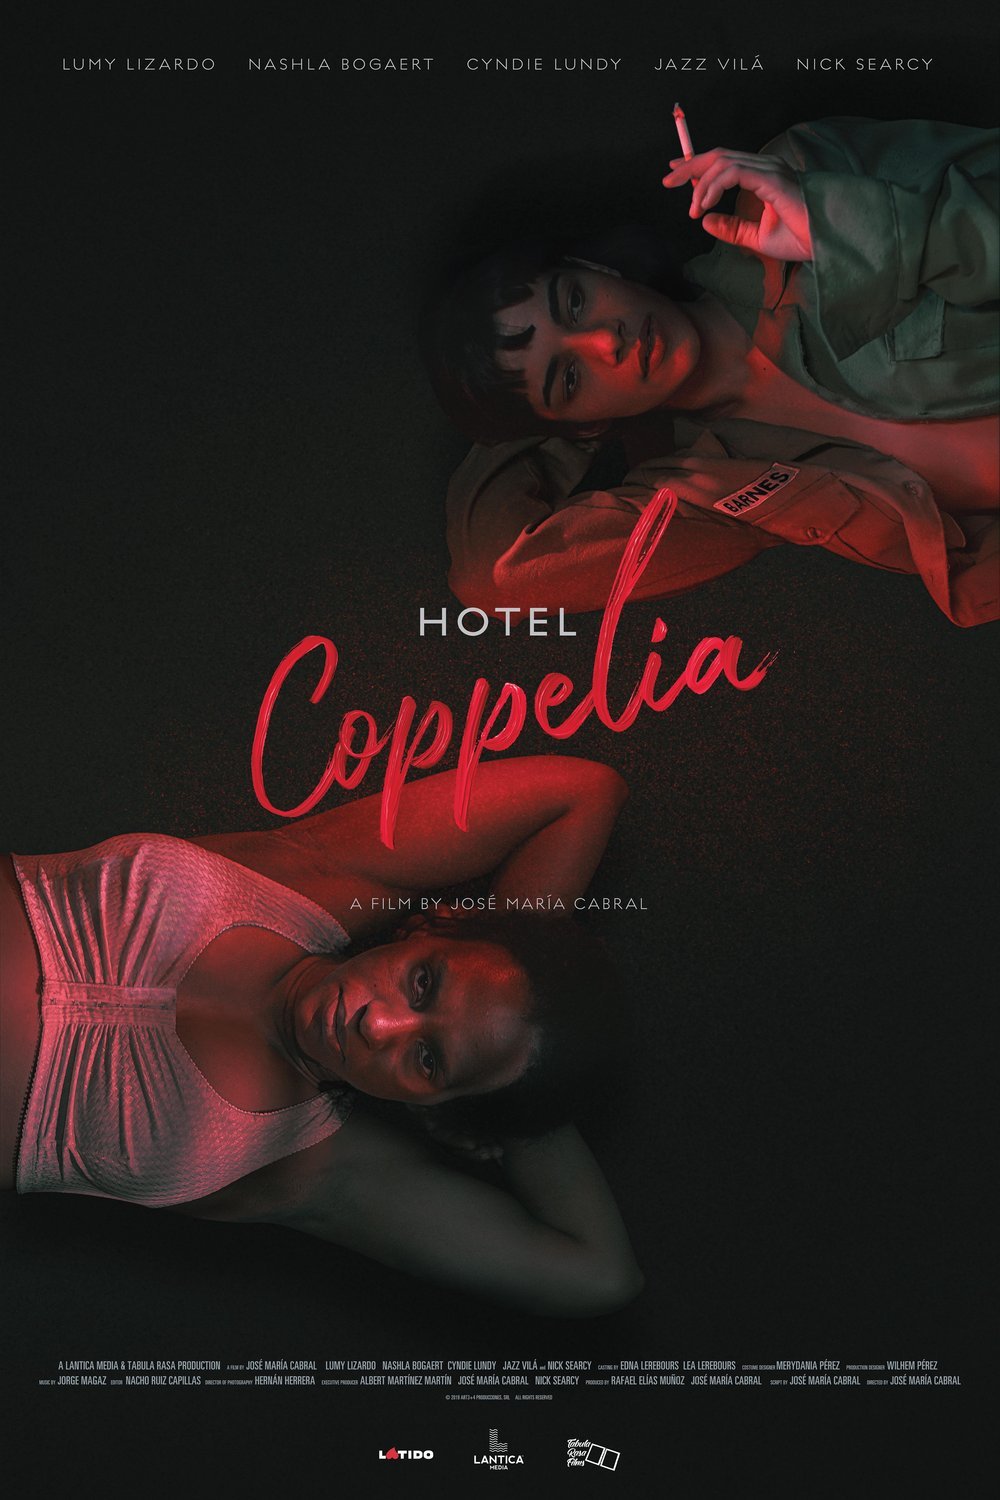 L'affiche originale du film Hotel Coppelia en espagnol